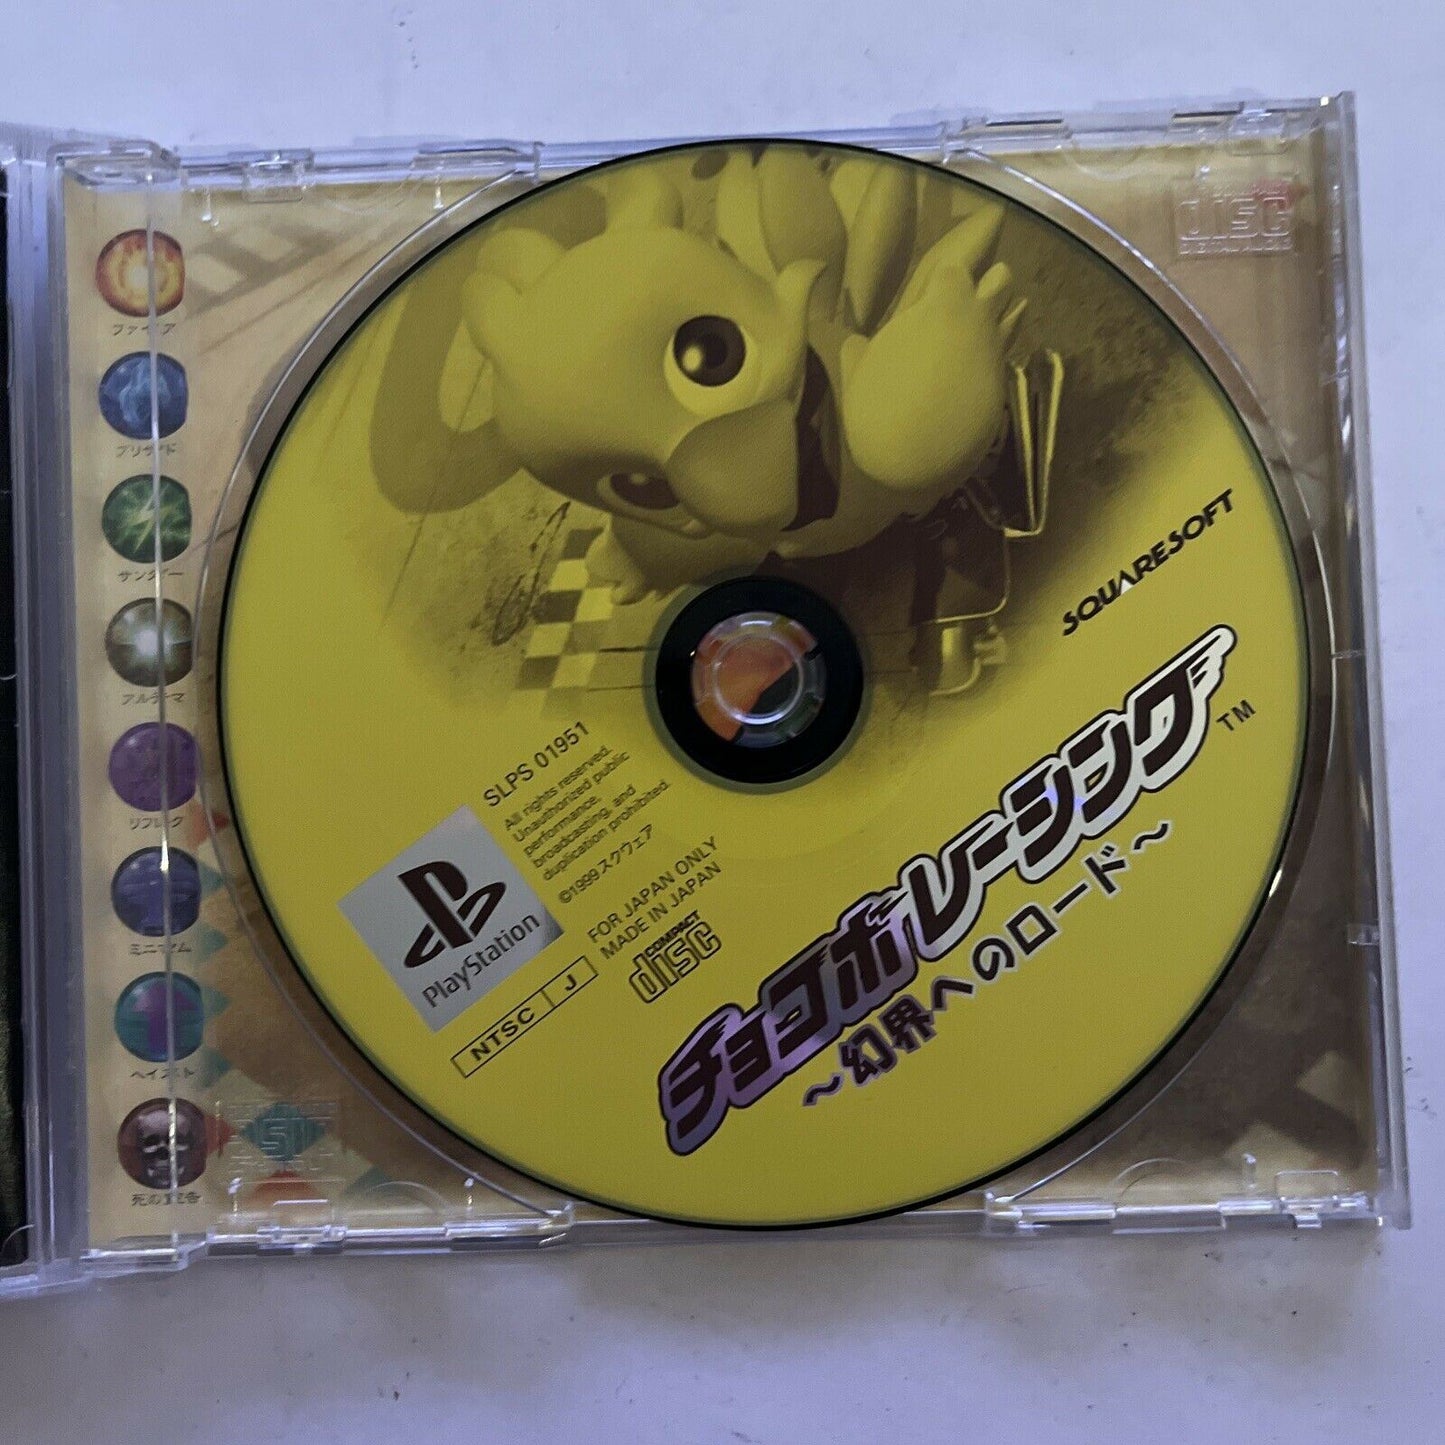 Chocobo Racing Genkai e no Road - PlayStation PS1 NTSC-J Japan Game with Manual